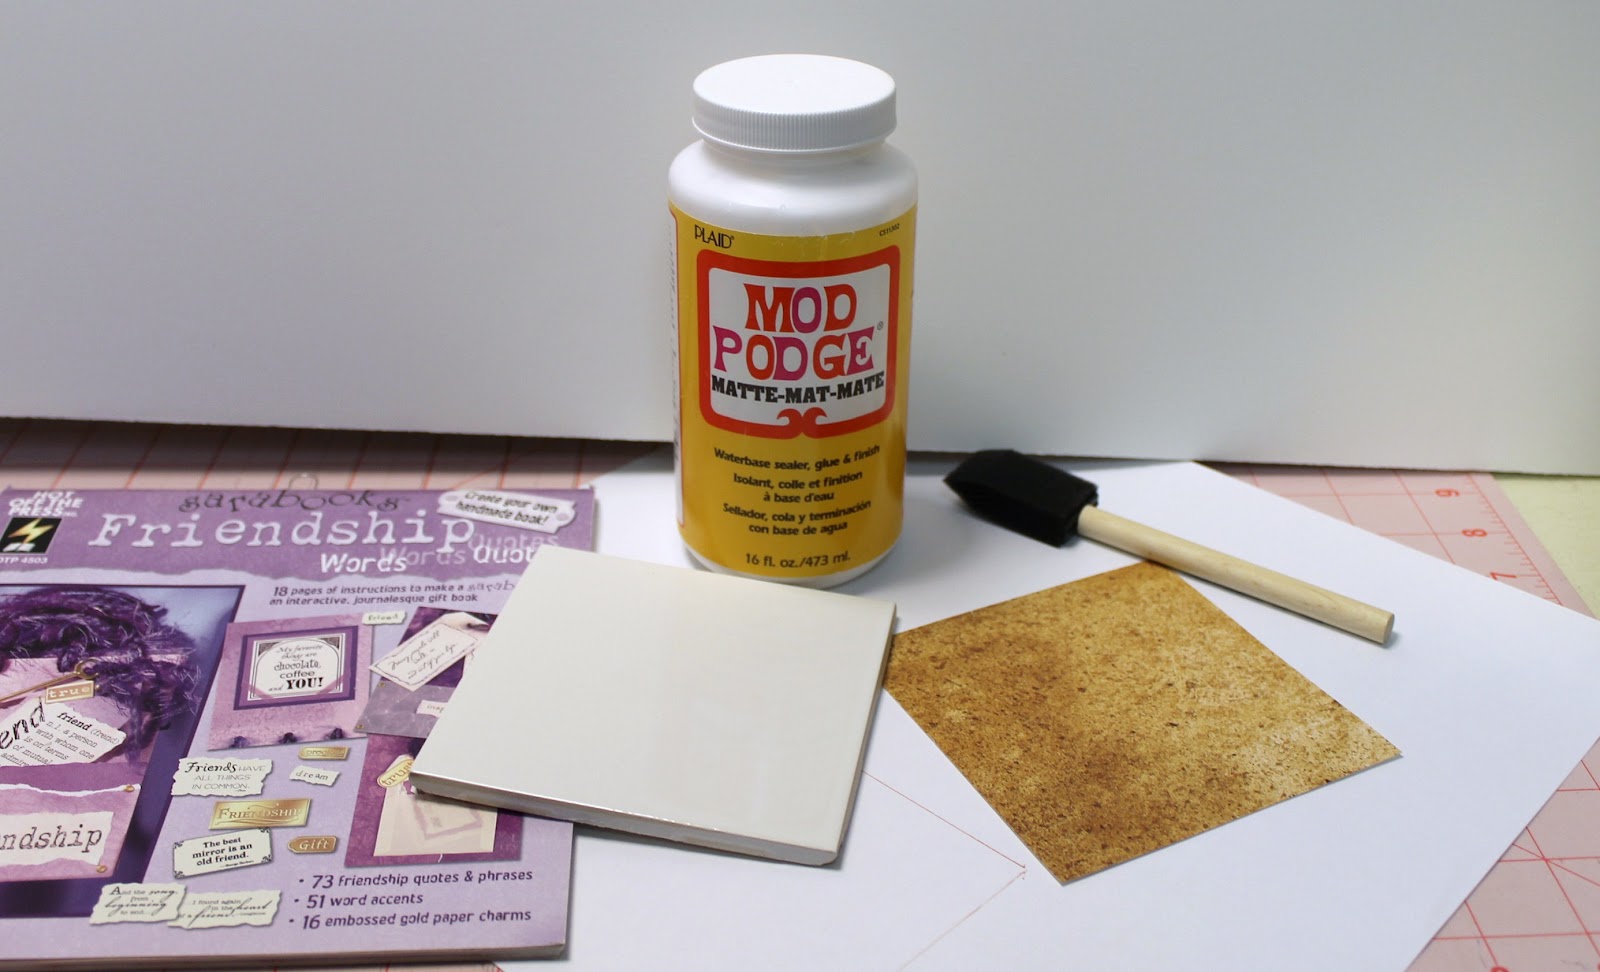 Paper Etiquette - Fine Paper Goods: DIY Printing Tips